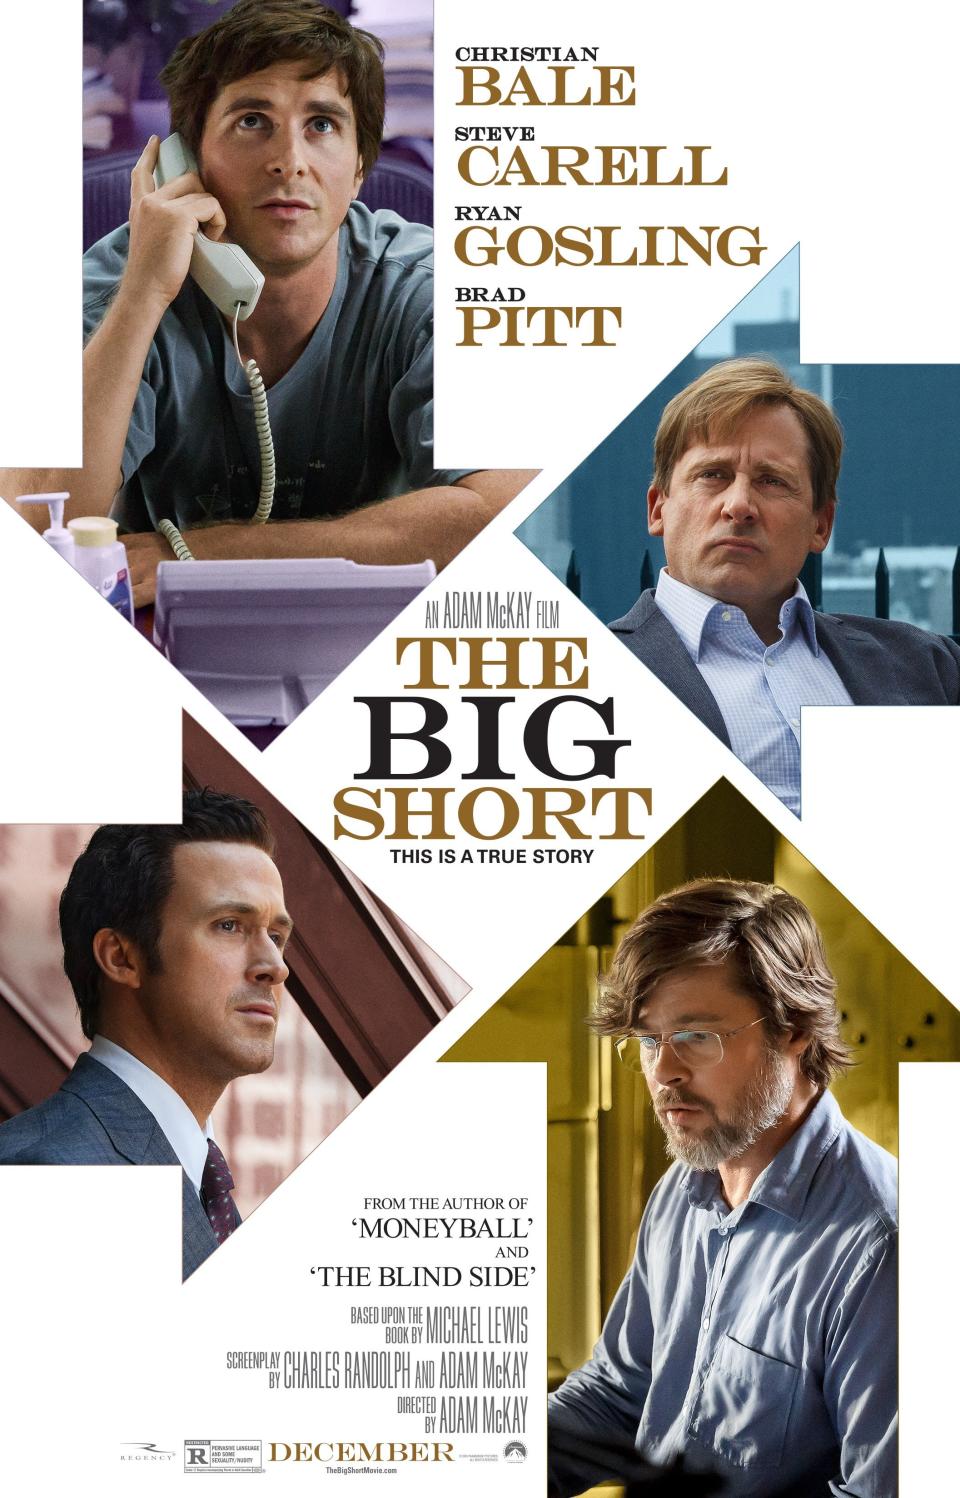 THE BIG SHORT, US advance poster, from top: Christian Bale, Steve Carell, Ryan Gosling, Brad Pitt, 2015. © Paramount/Courtesy Everett Collection